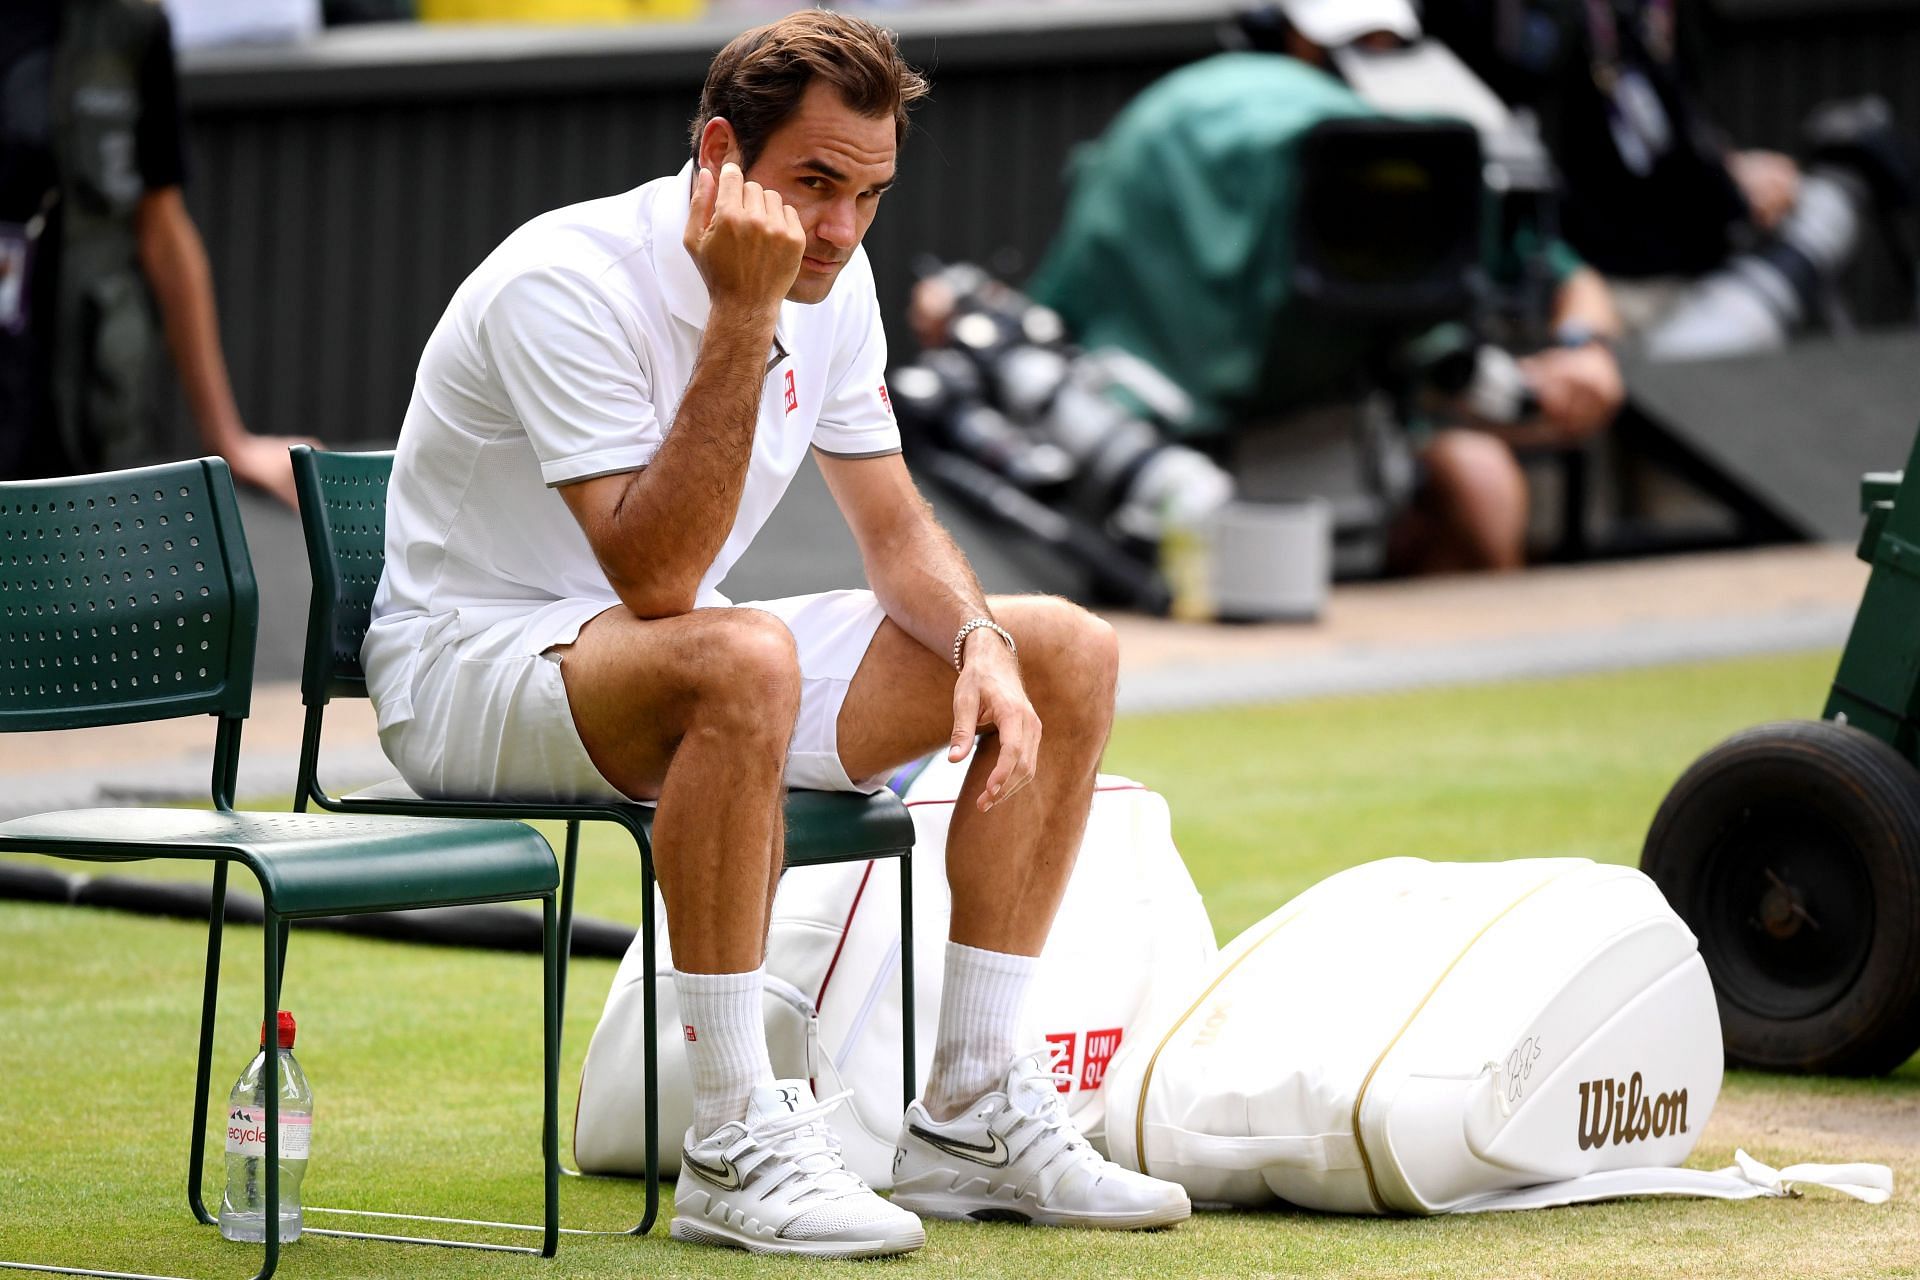 Federer at 2019 Wimbledon against Djokovic